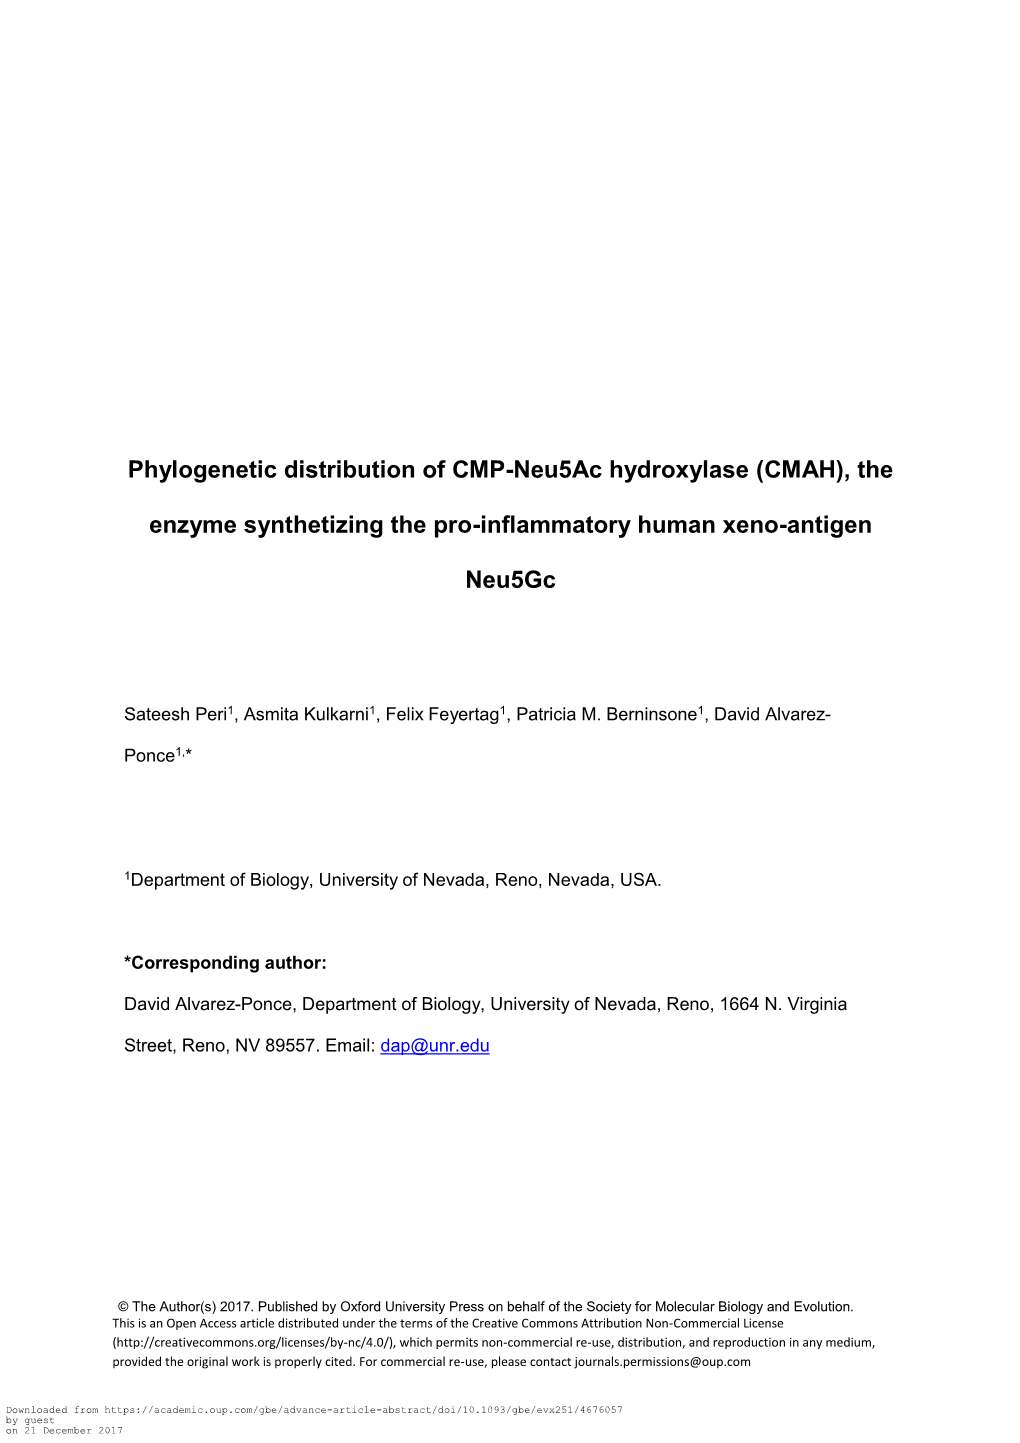 Phylogenetic Distribution of CMP-Neu5ac Hydroxylase (CMAH), The